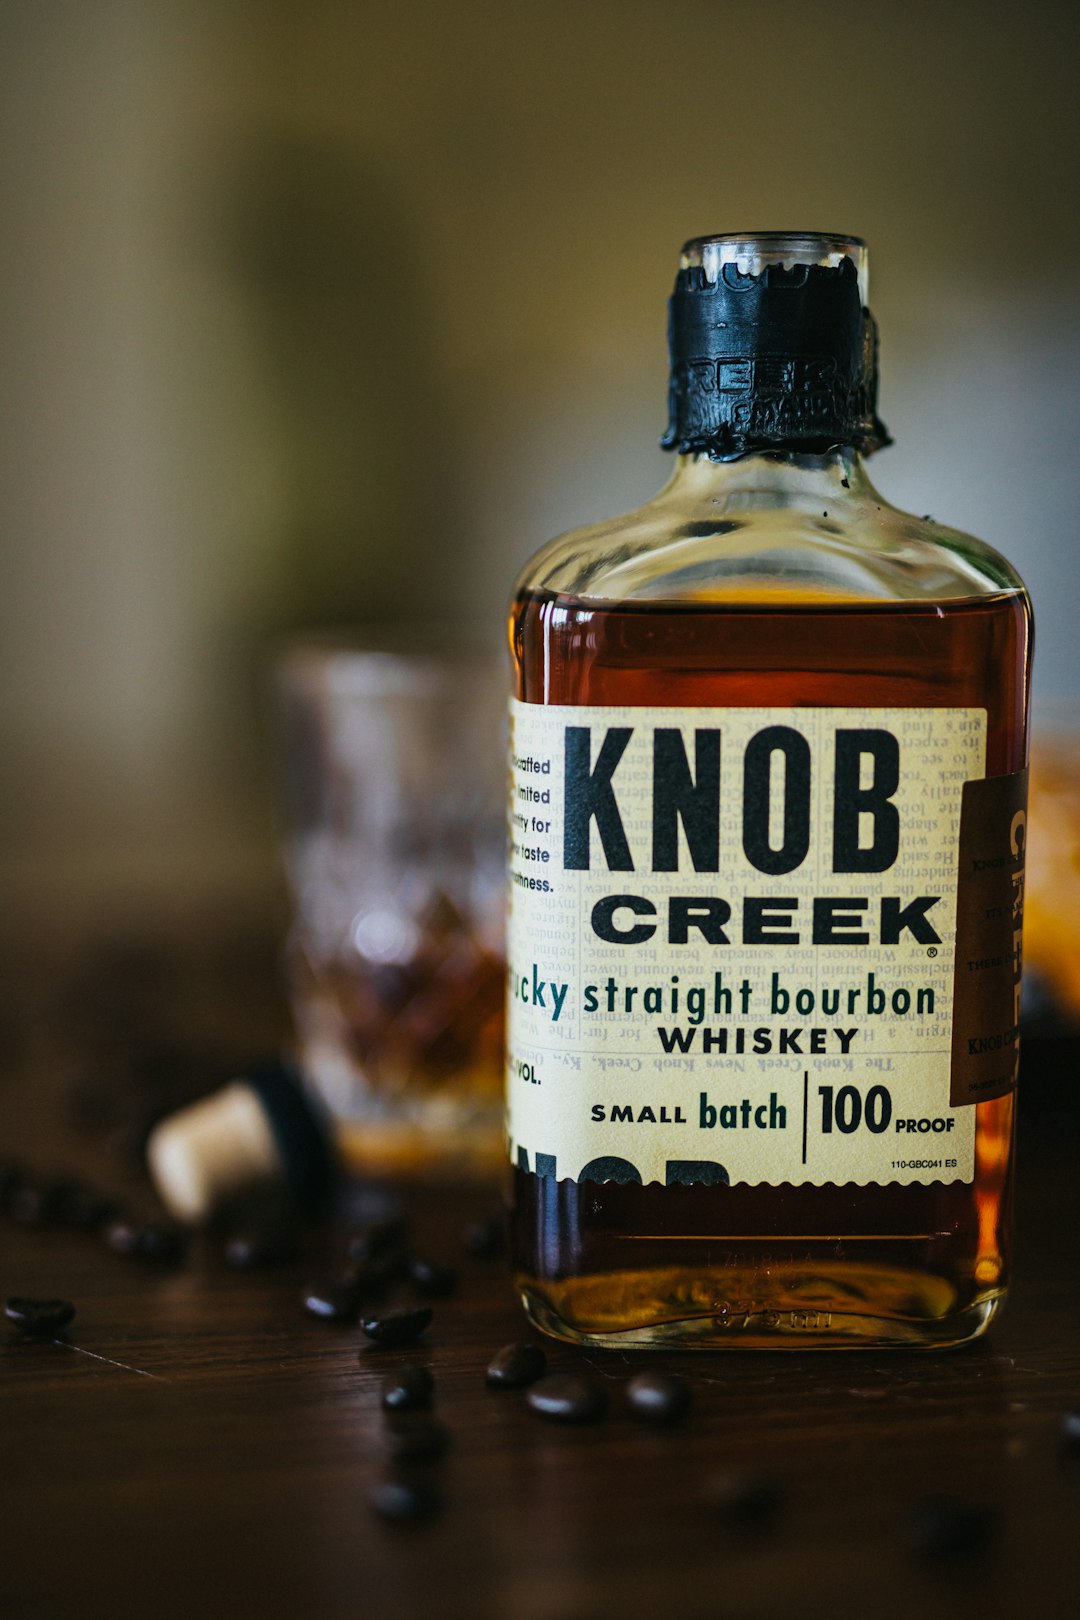 Knob creek does not make the perfect vodka martini, but it is damn good bourbon.